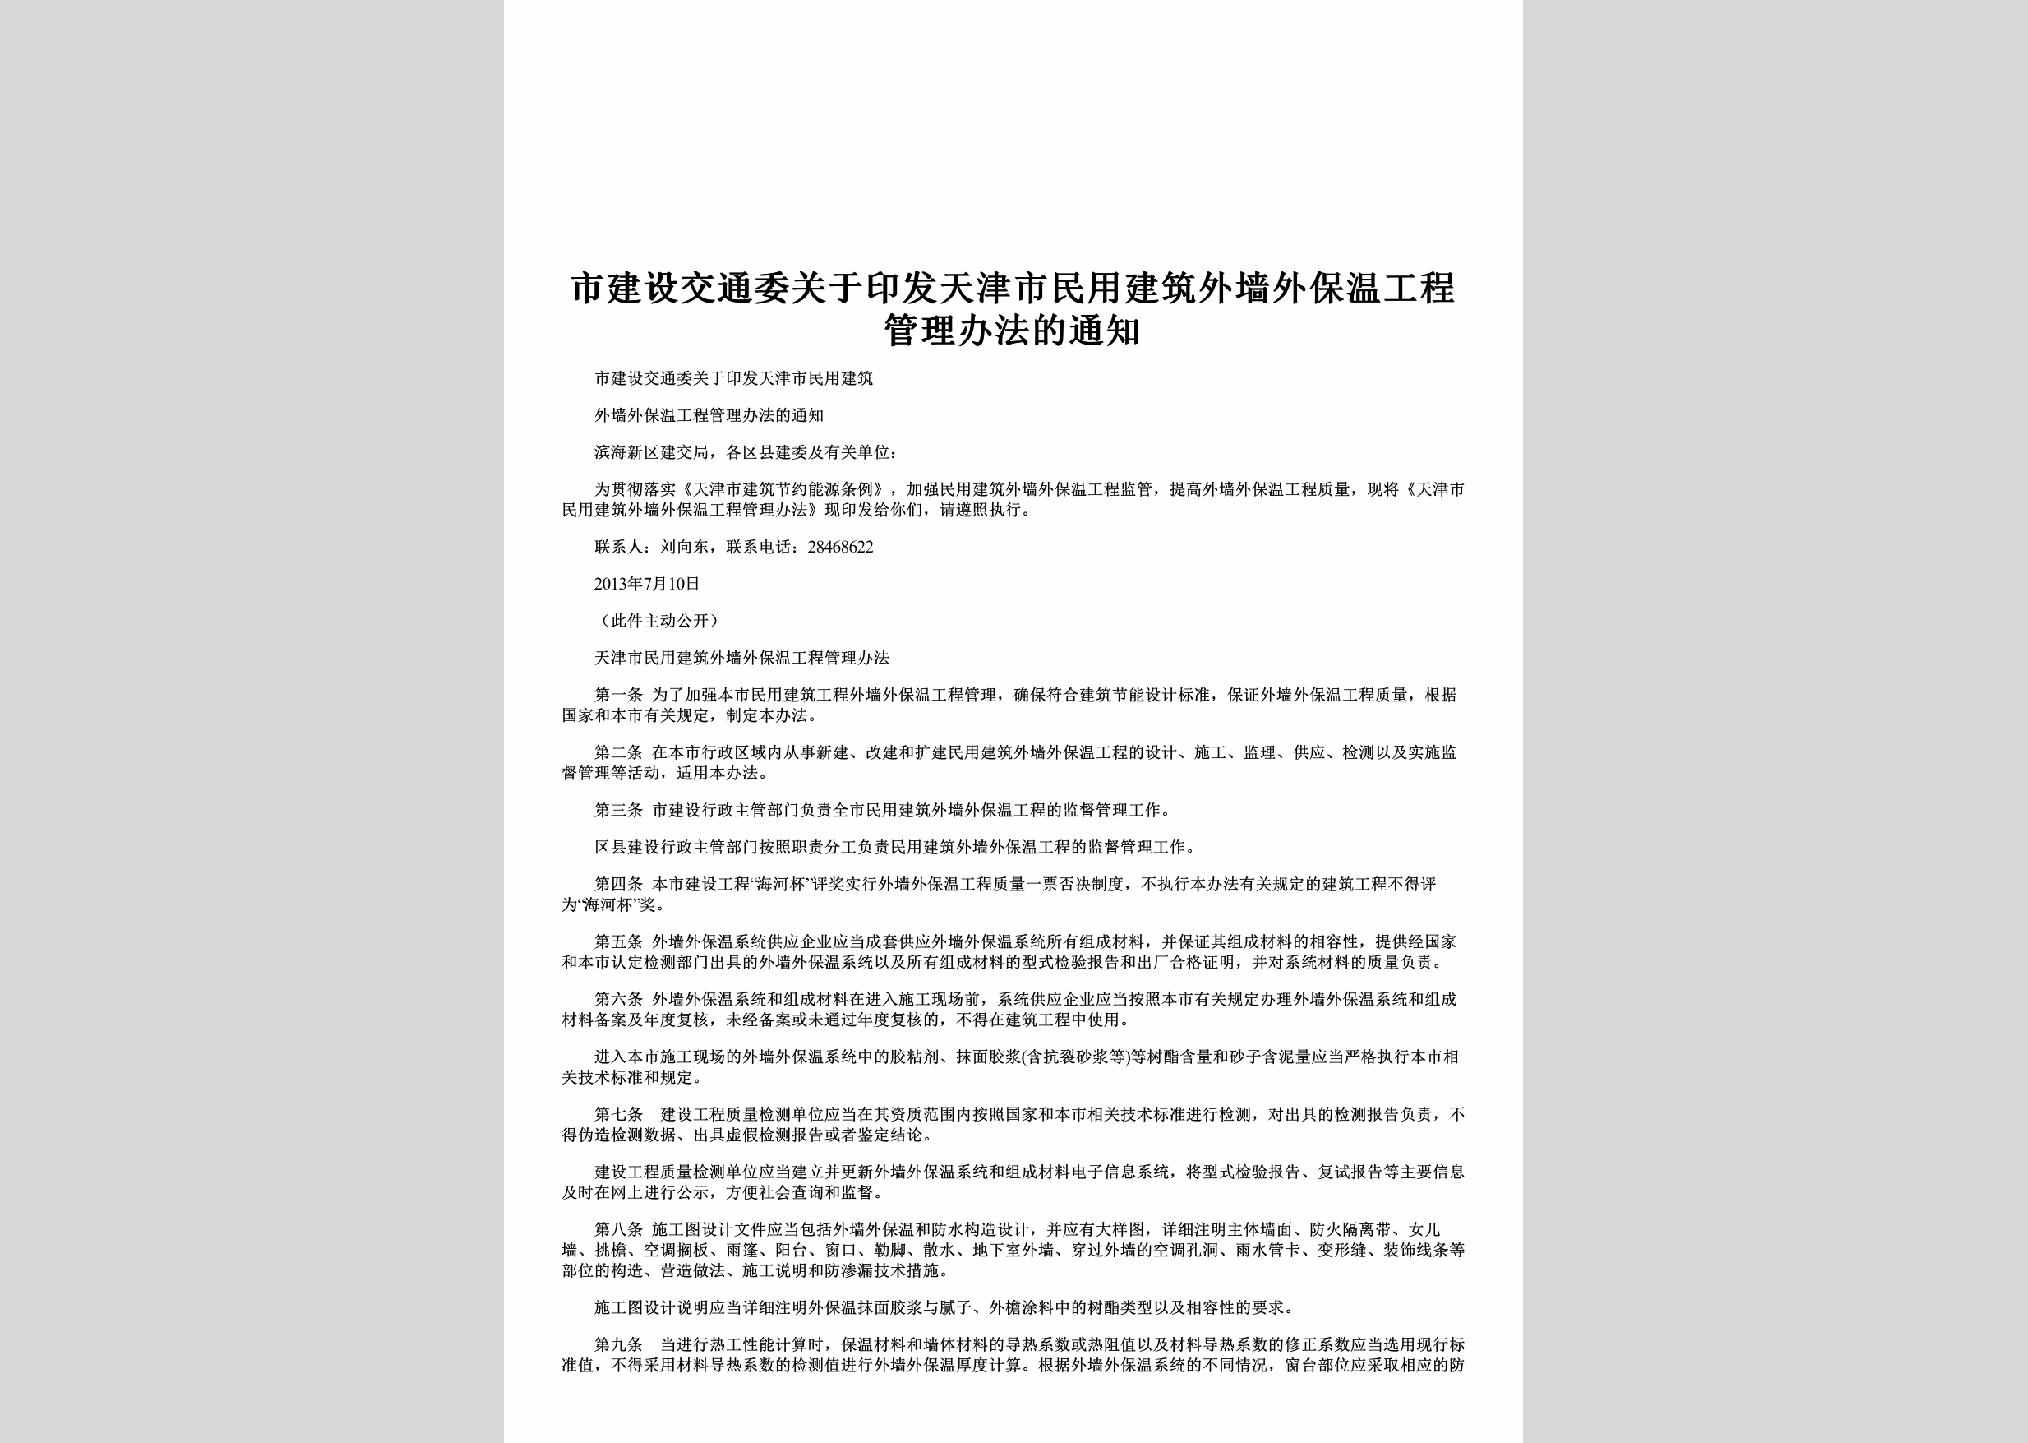 TJ-GYYFTJSM-2013：关于印发天津市民用建筑外墙外保温工程管理办法的通知